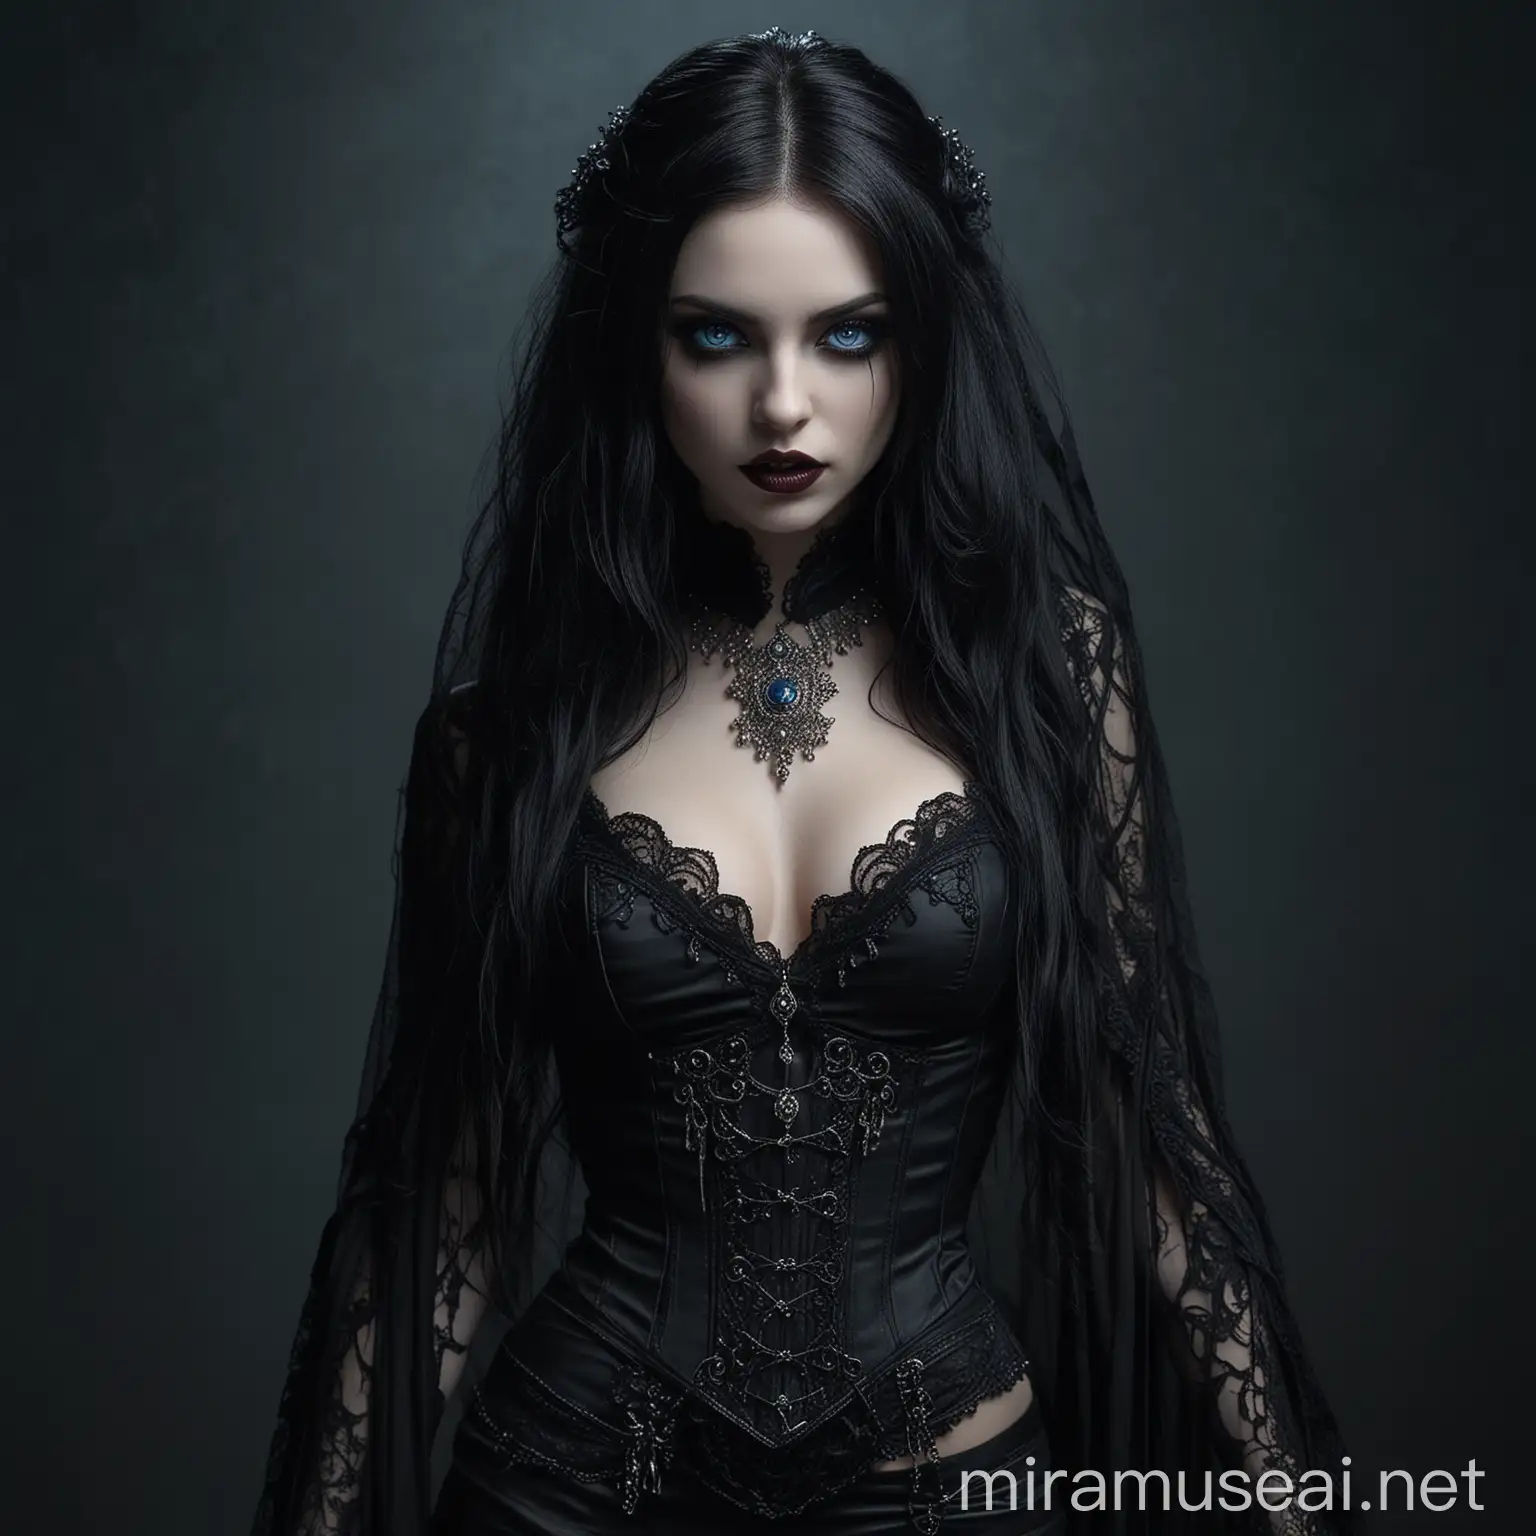 Sultry Female Vampire in Elegant Gothic Attire